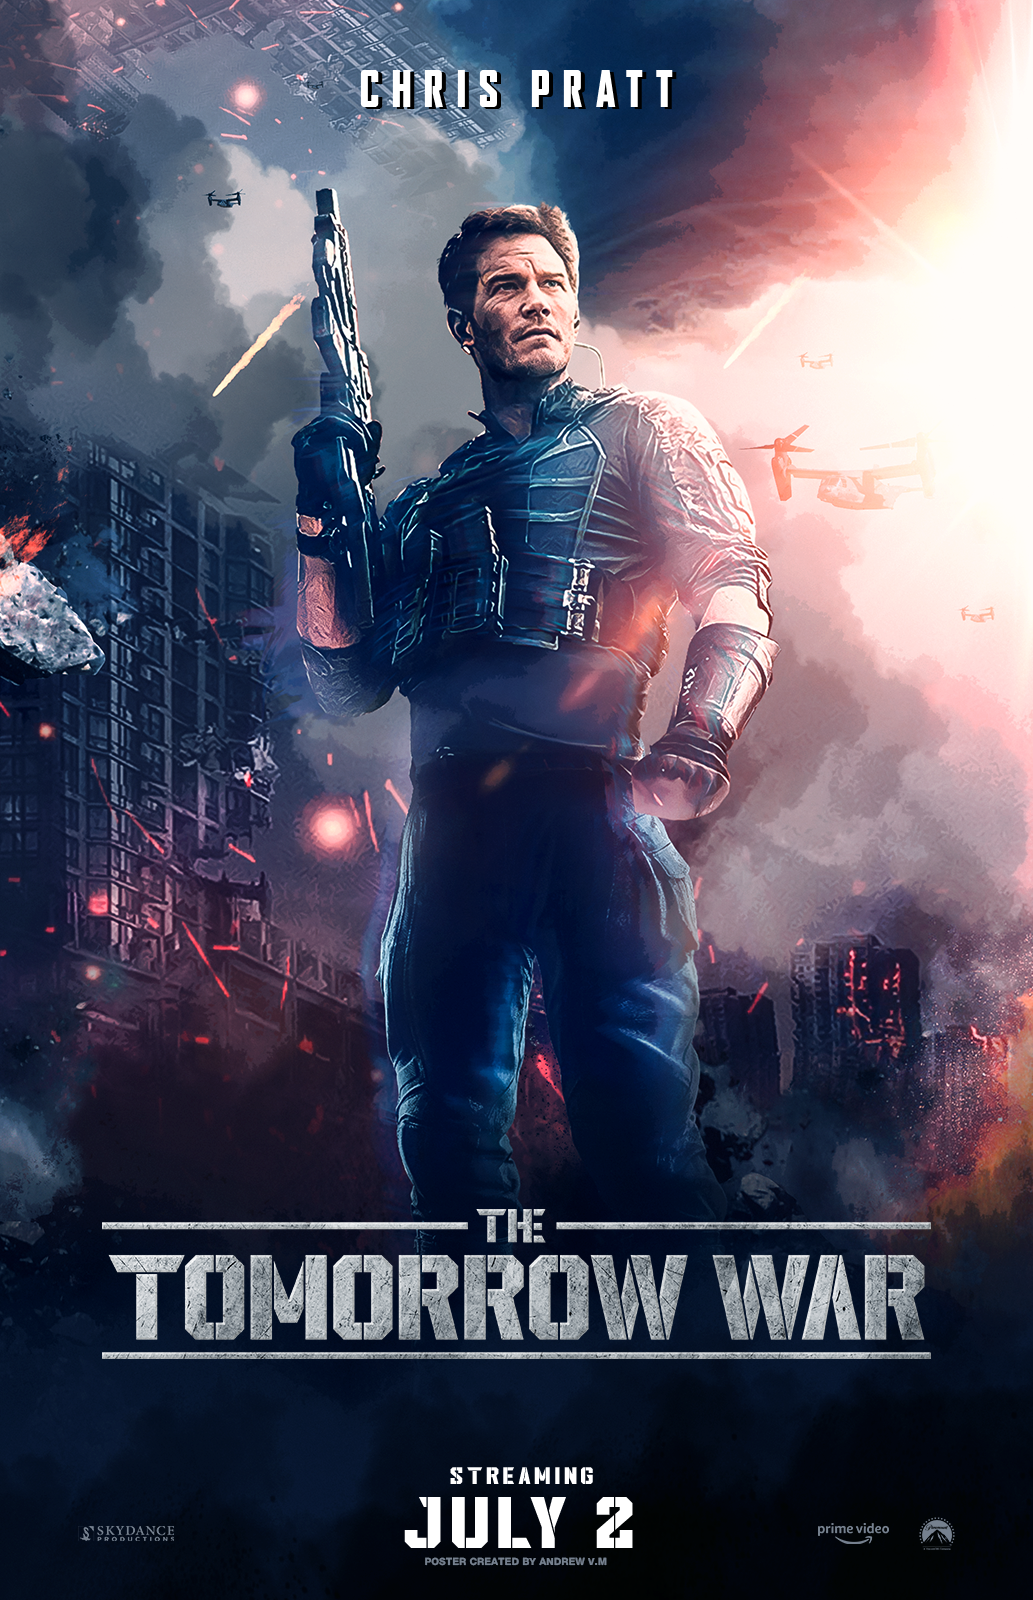 Chris Pratt In The Tomorrow War Wallpapers